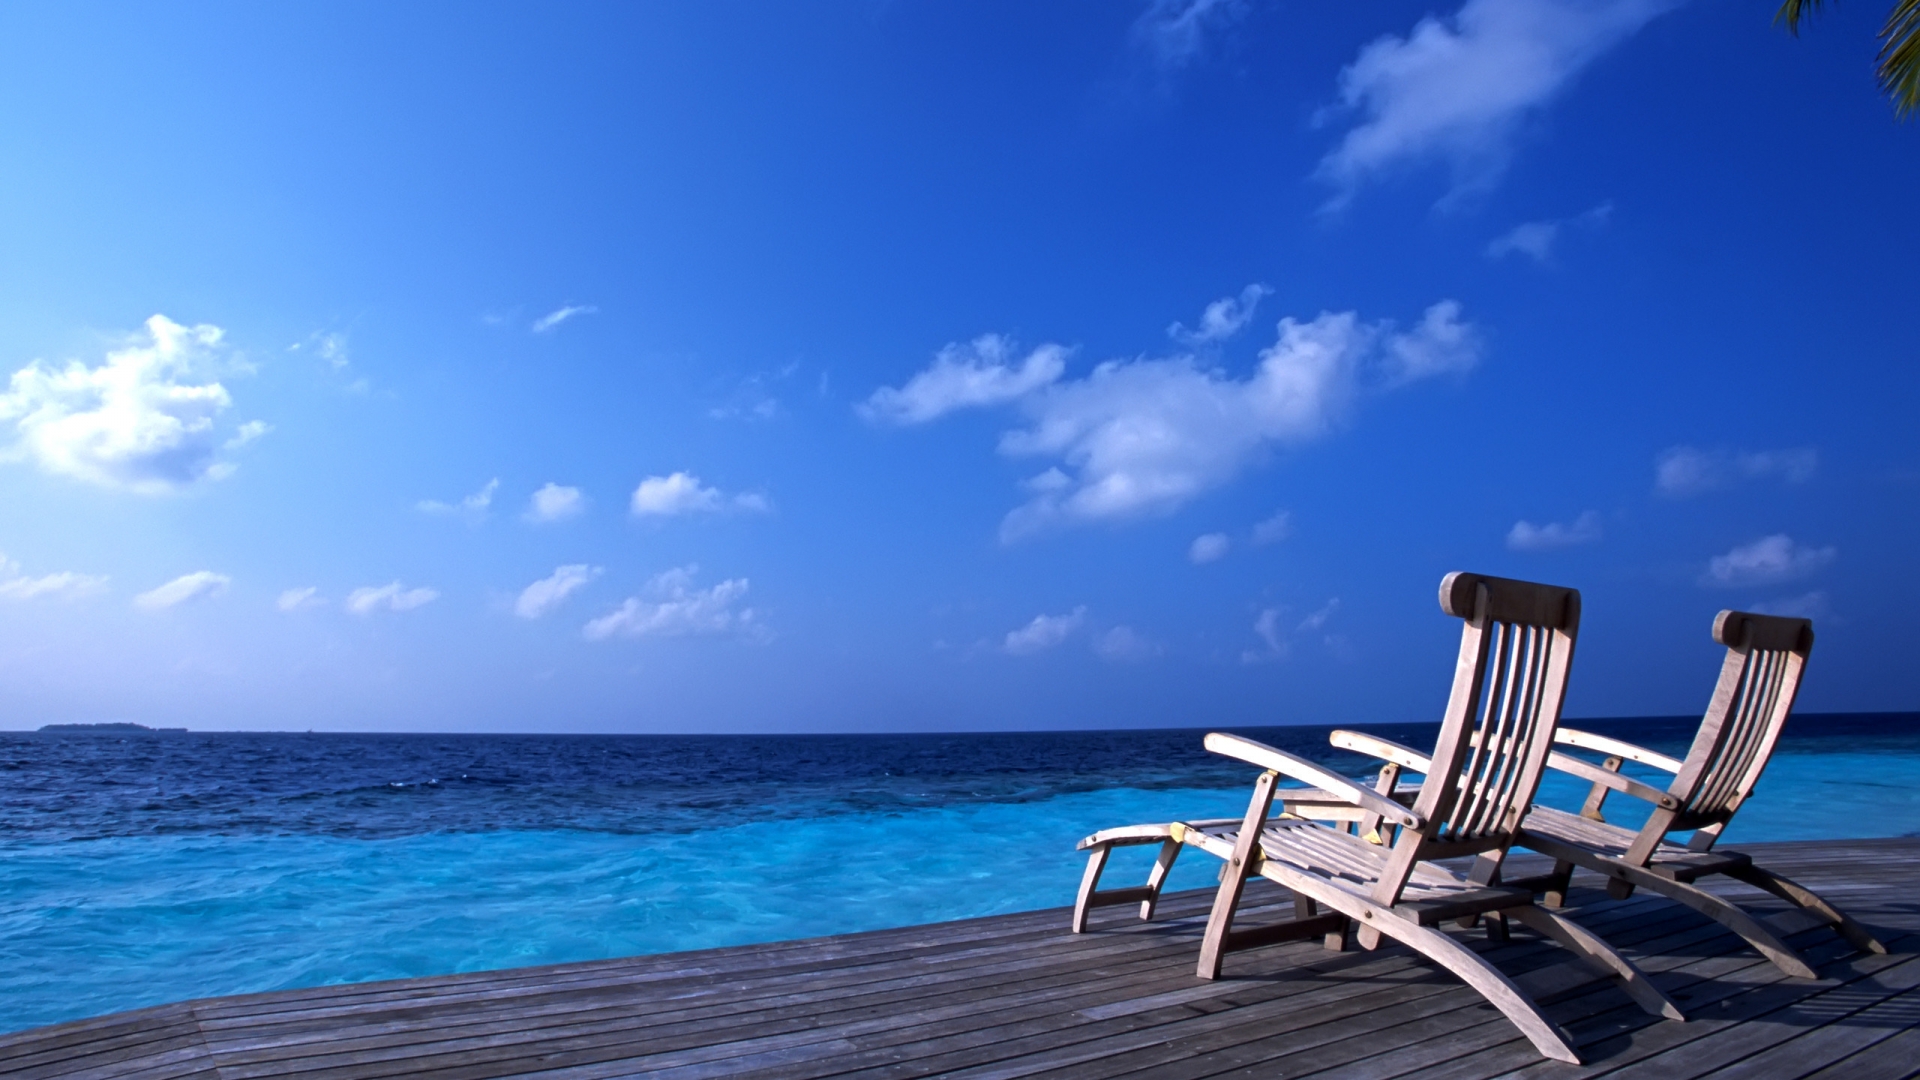 Maldives Beach for 1920 x 1080 HDTV 1080p resolution